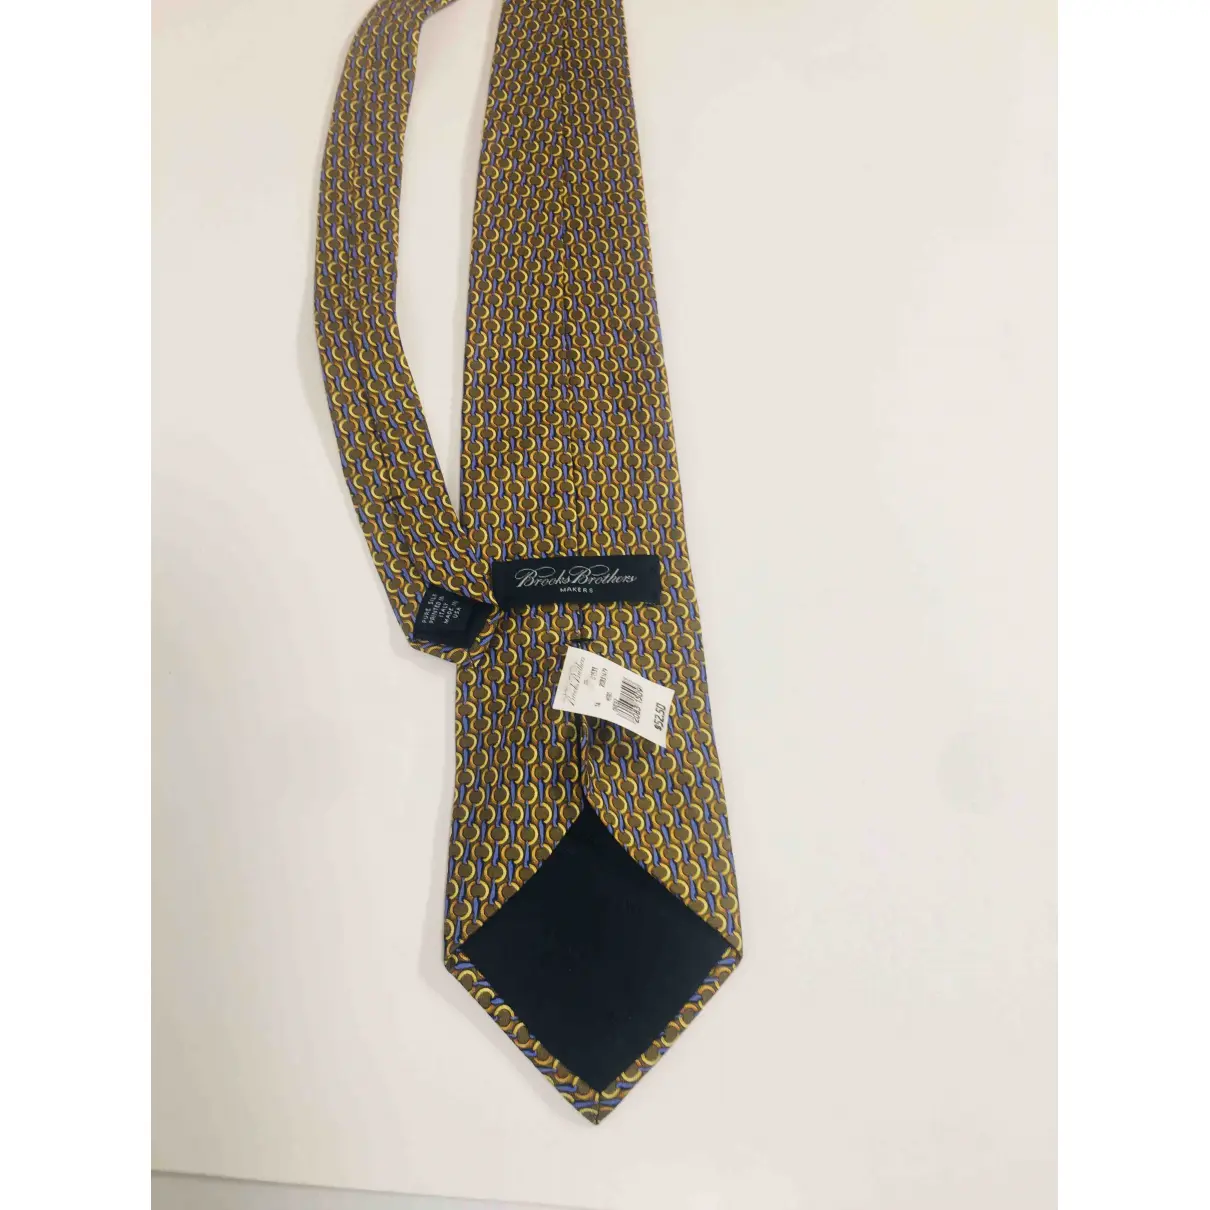 Buy Brooks Brothers Silk tie online